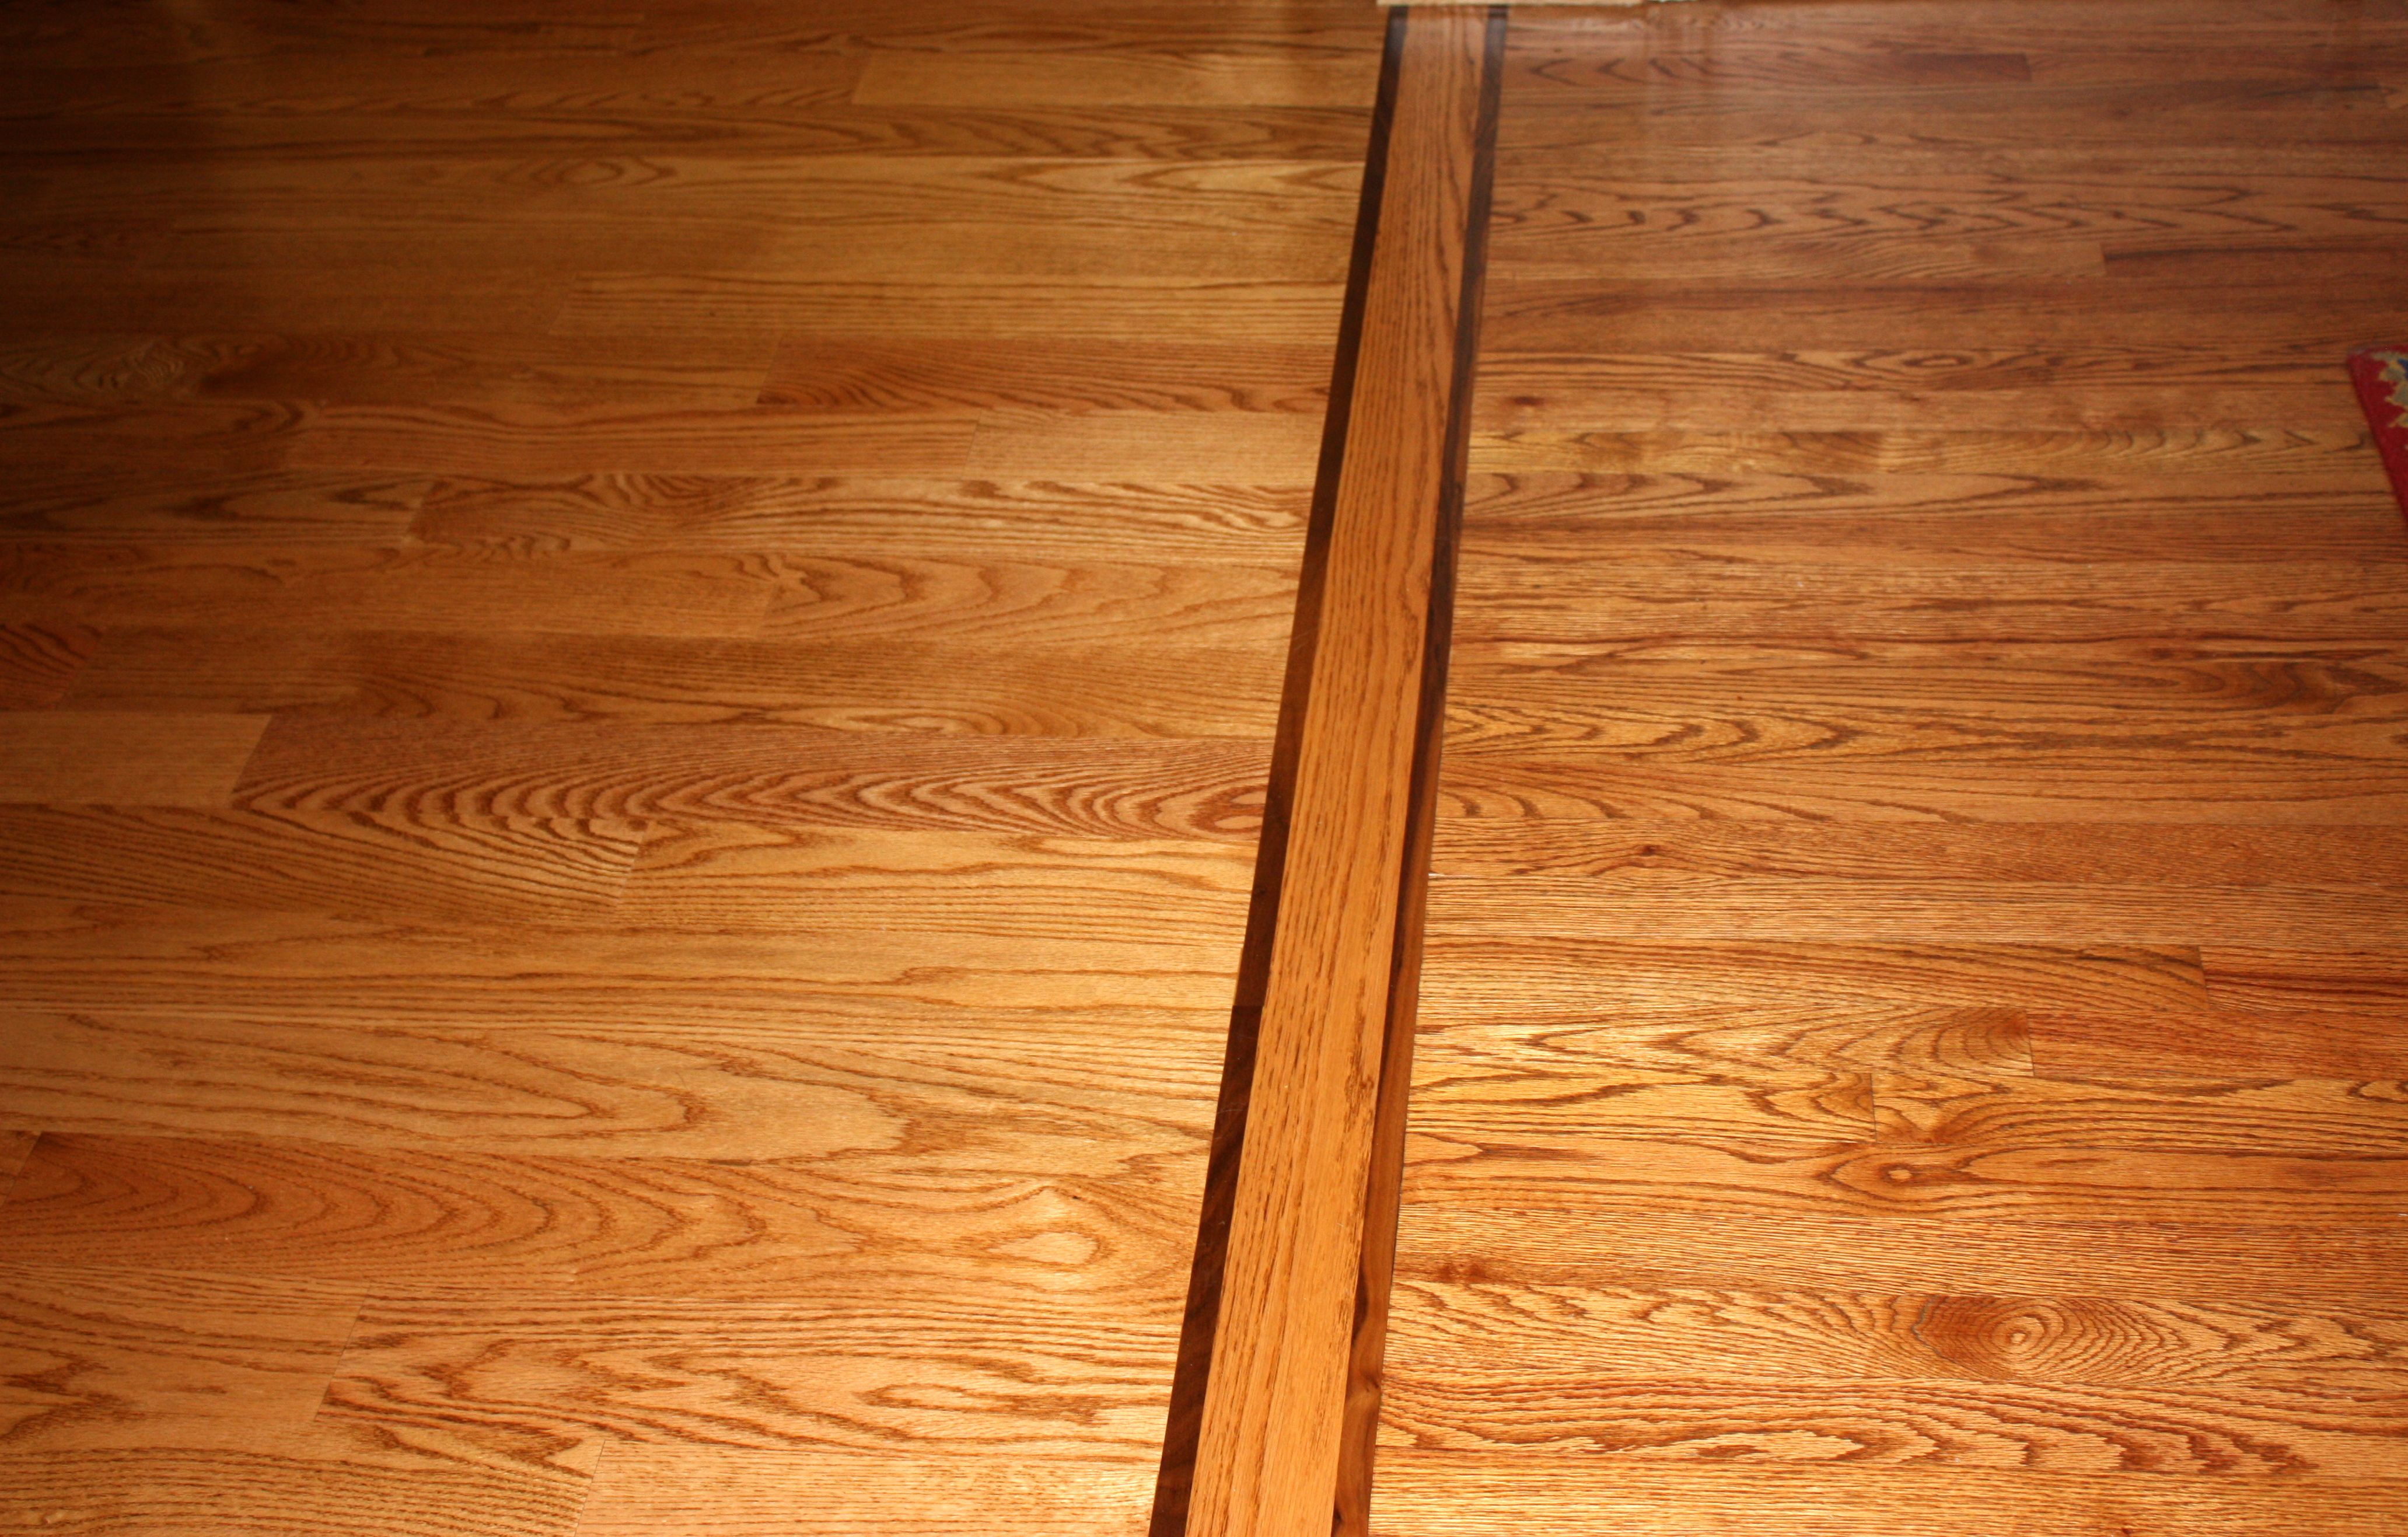 Matching An Existing Hardwood Floor, Matching Hardwood Floors To Laminate